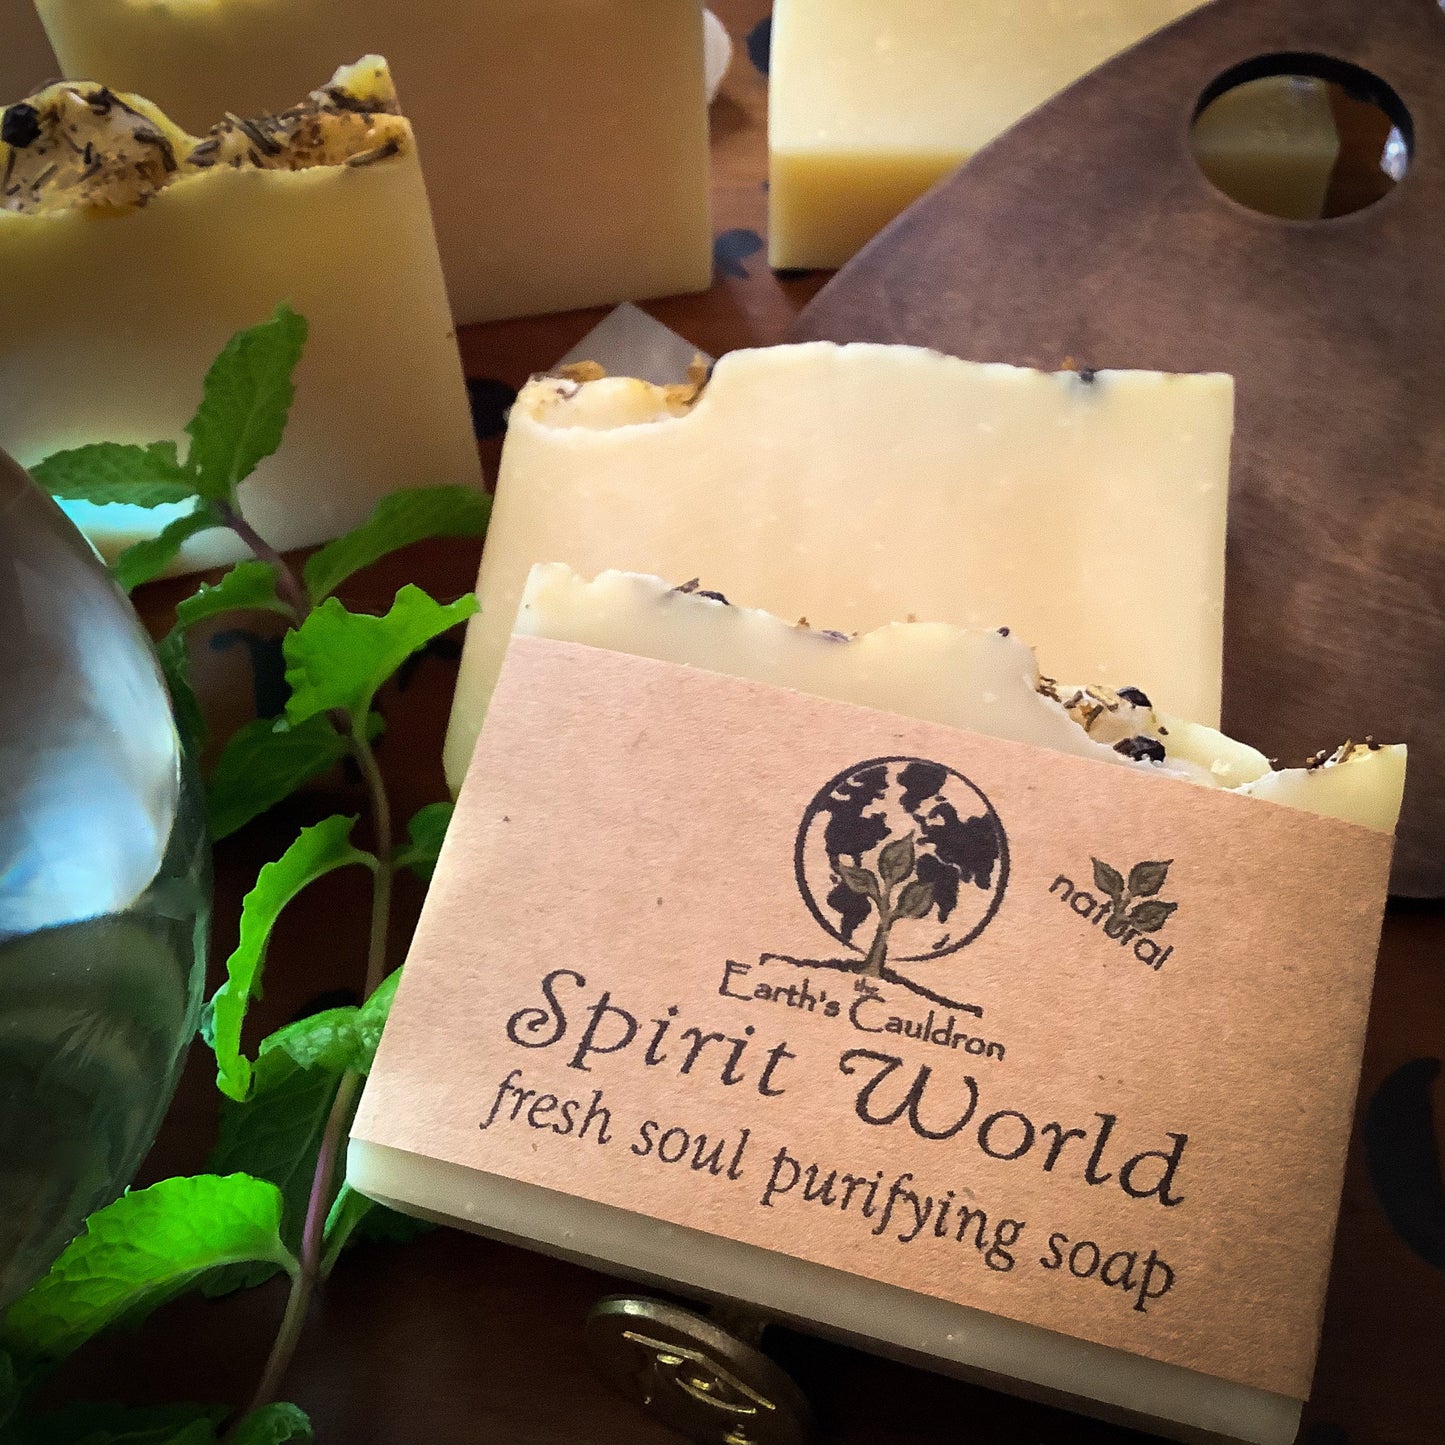 Spirit World ~ Fresh, Soul Purifying Soap